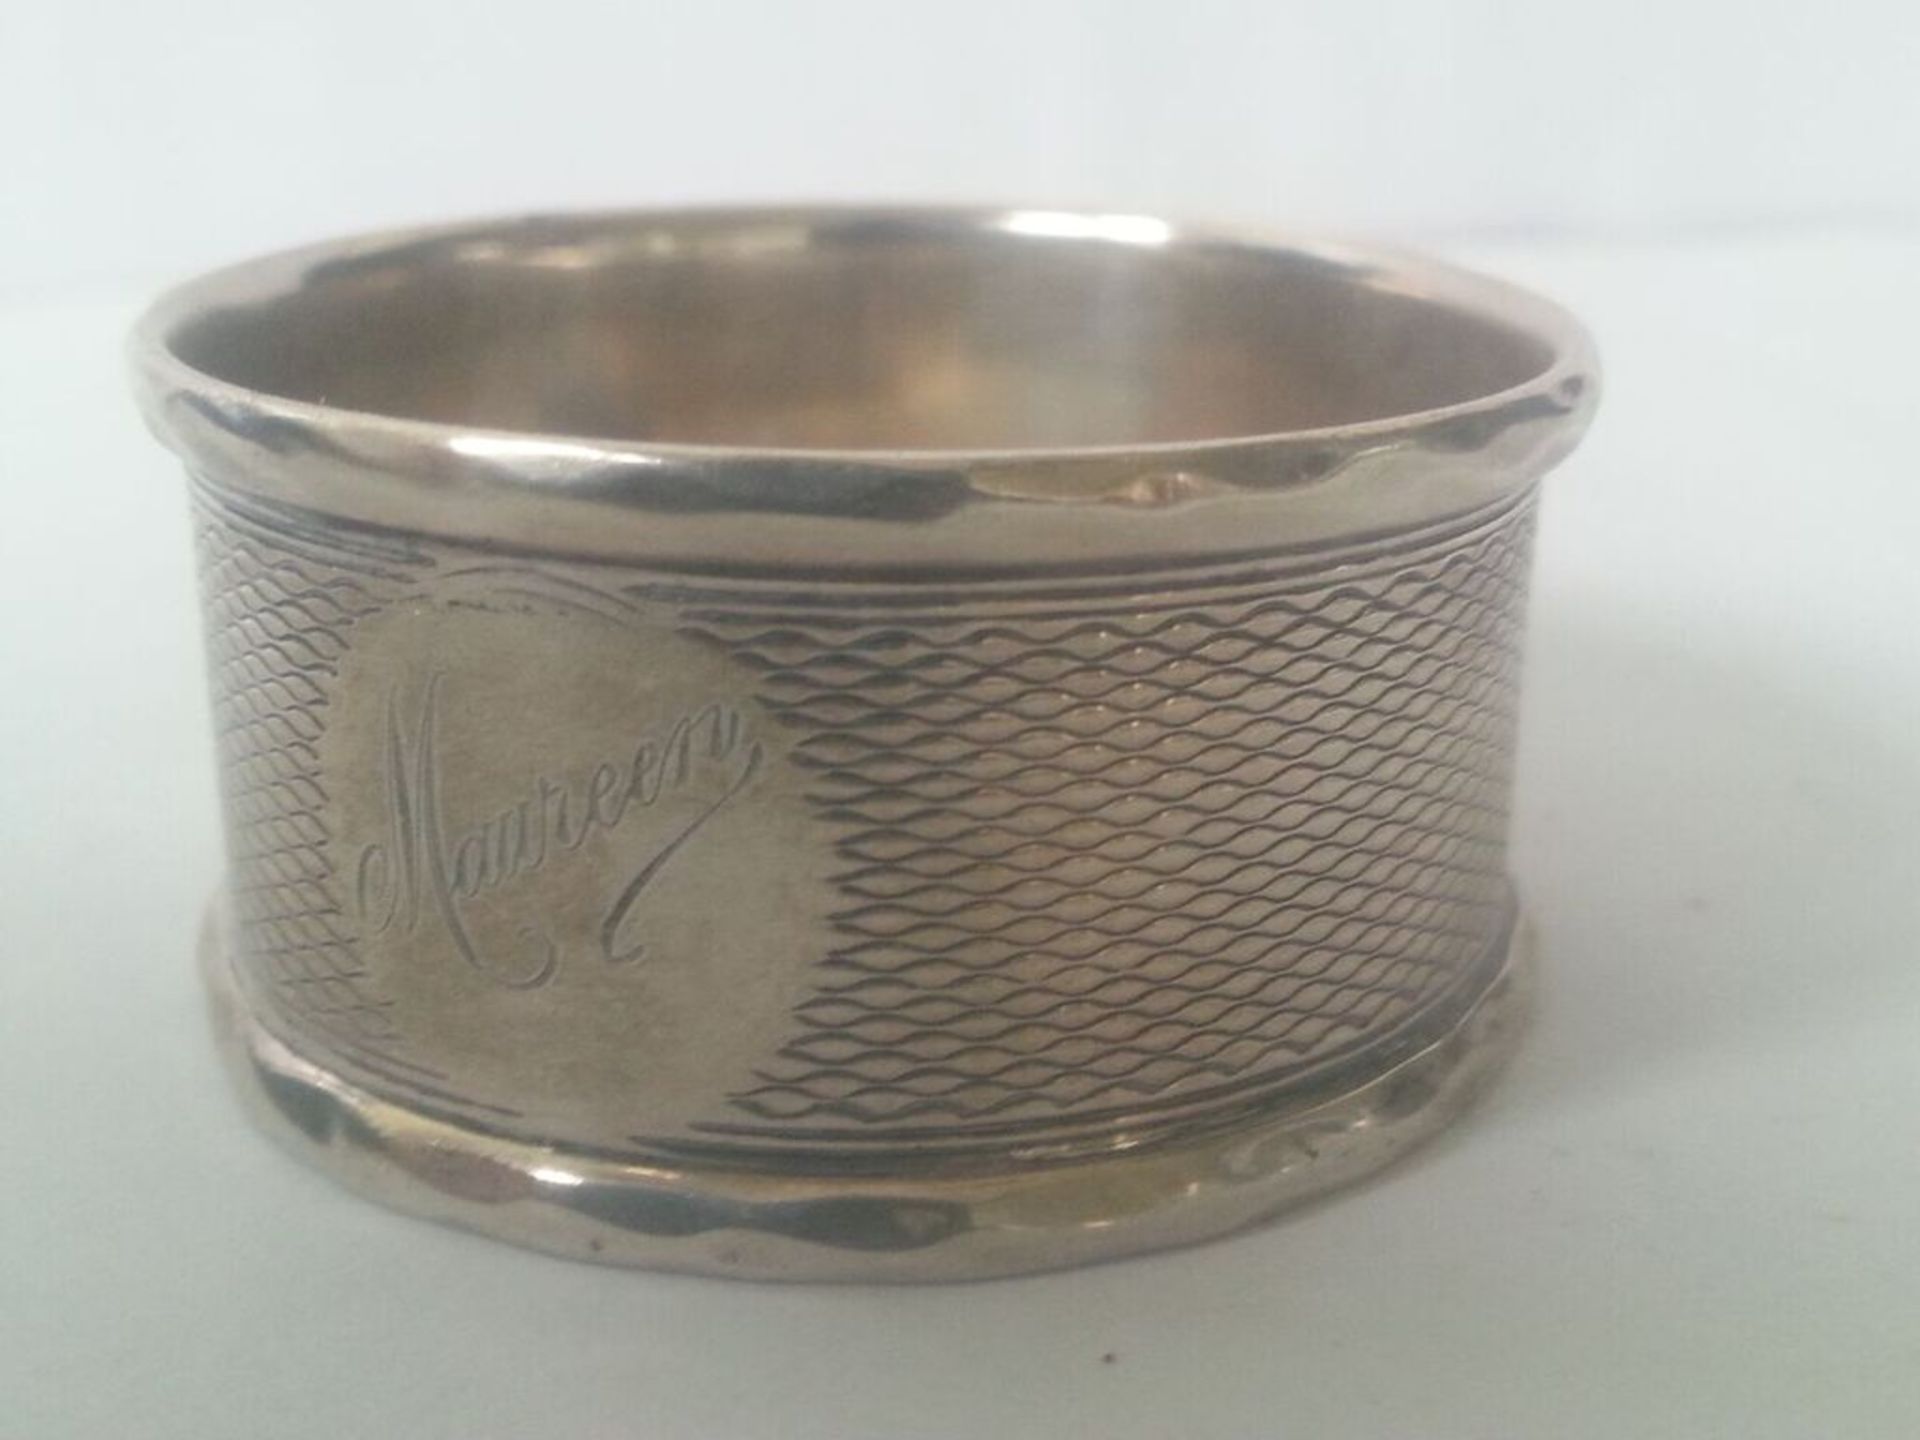 Late 19th Century hallmarked Birmingham silver napkin ring, engraved "Maureen" - Image 2 of 2